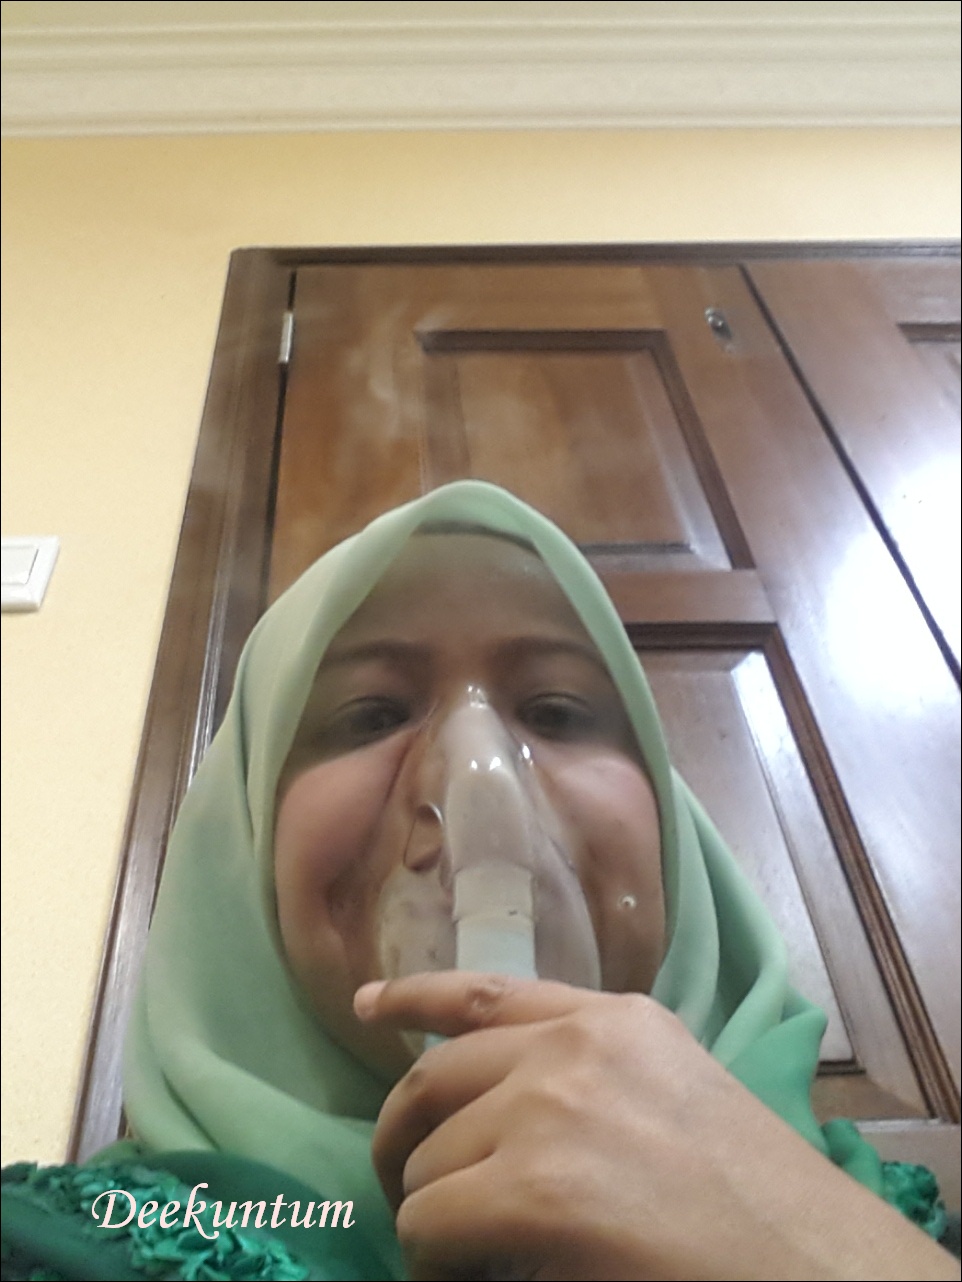 Dee: Asthma or Bronchitis?